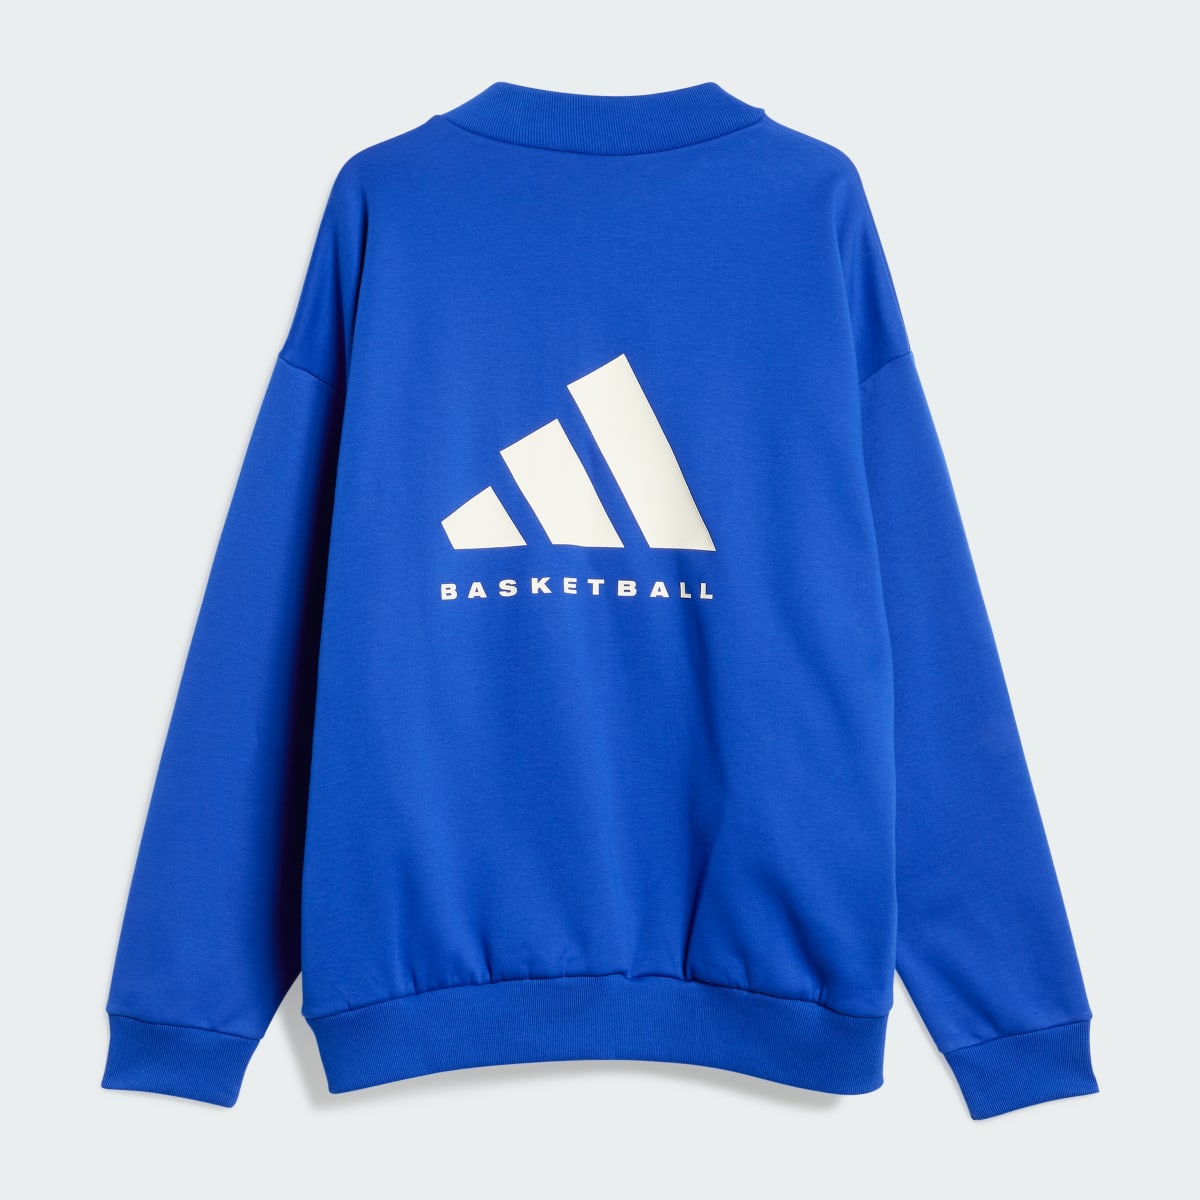 Adidas Basketball Sweatshirt. 5